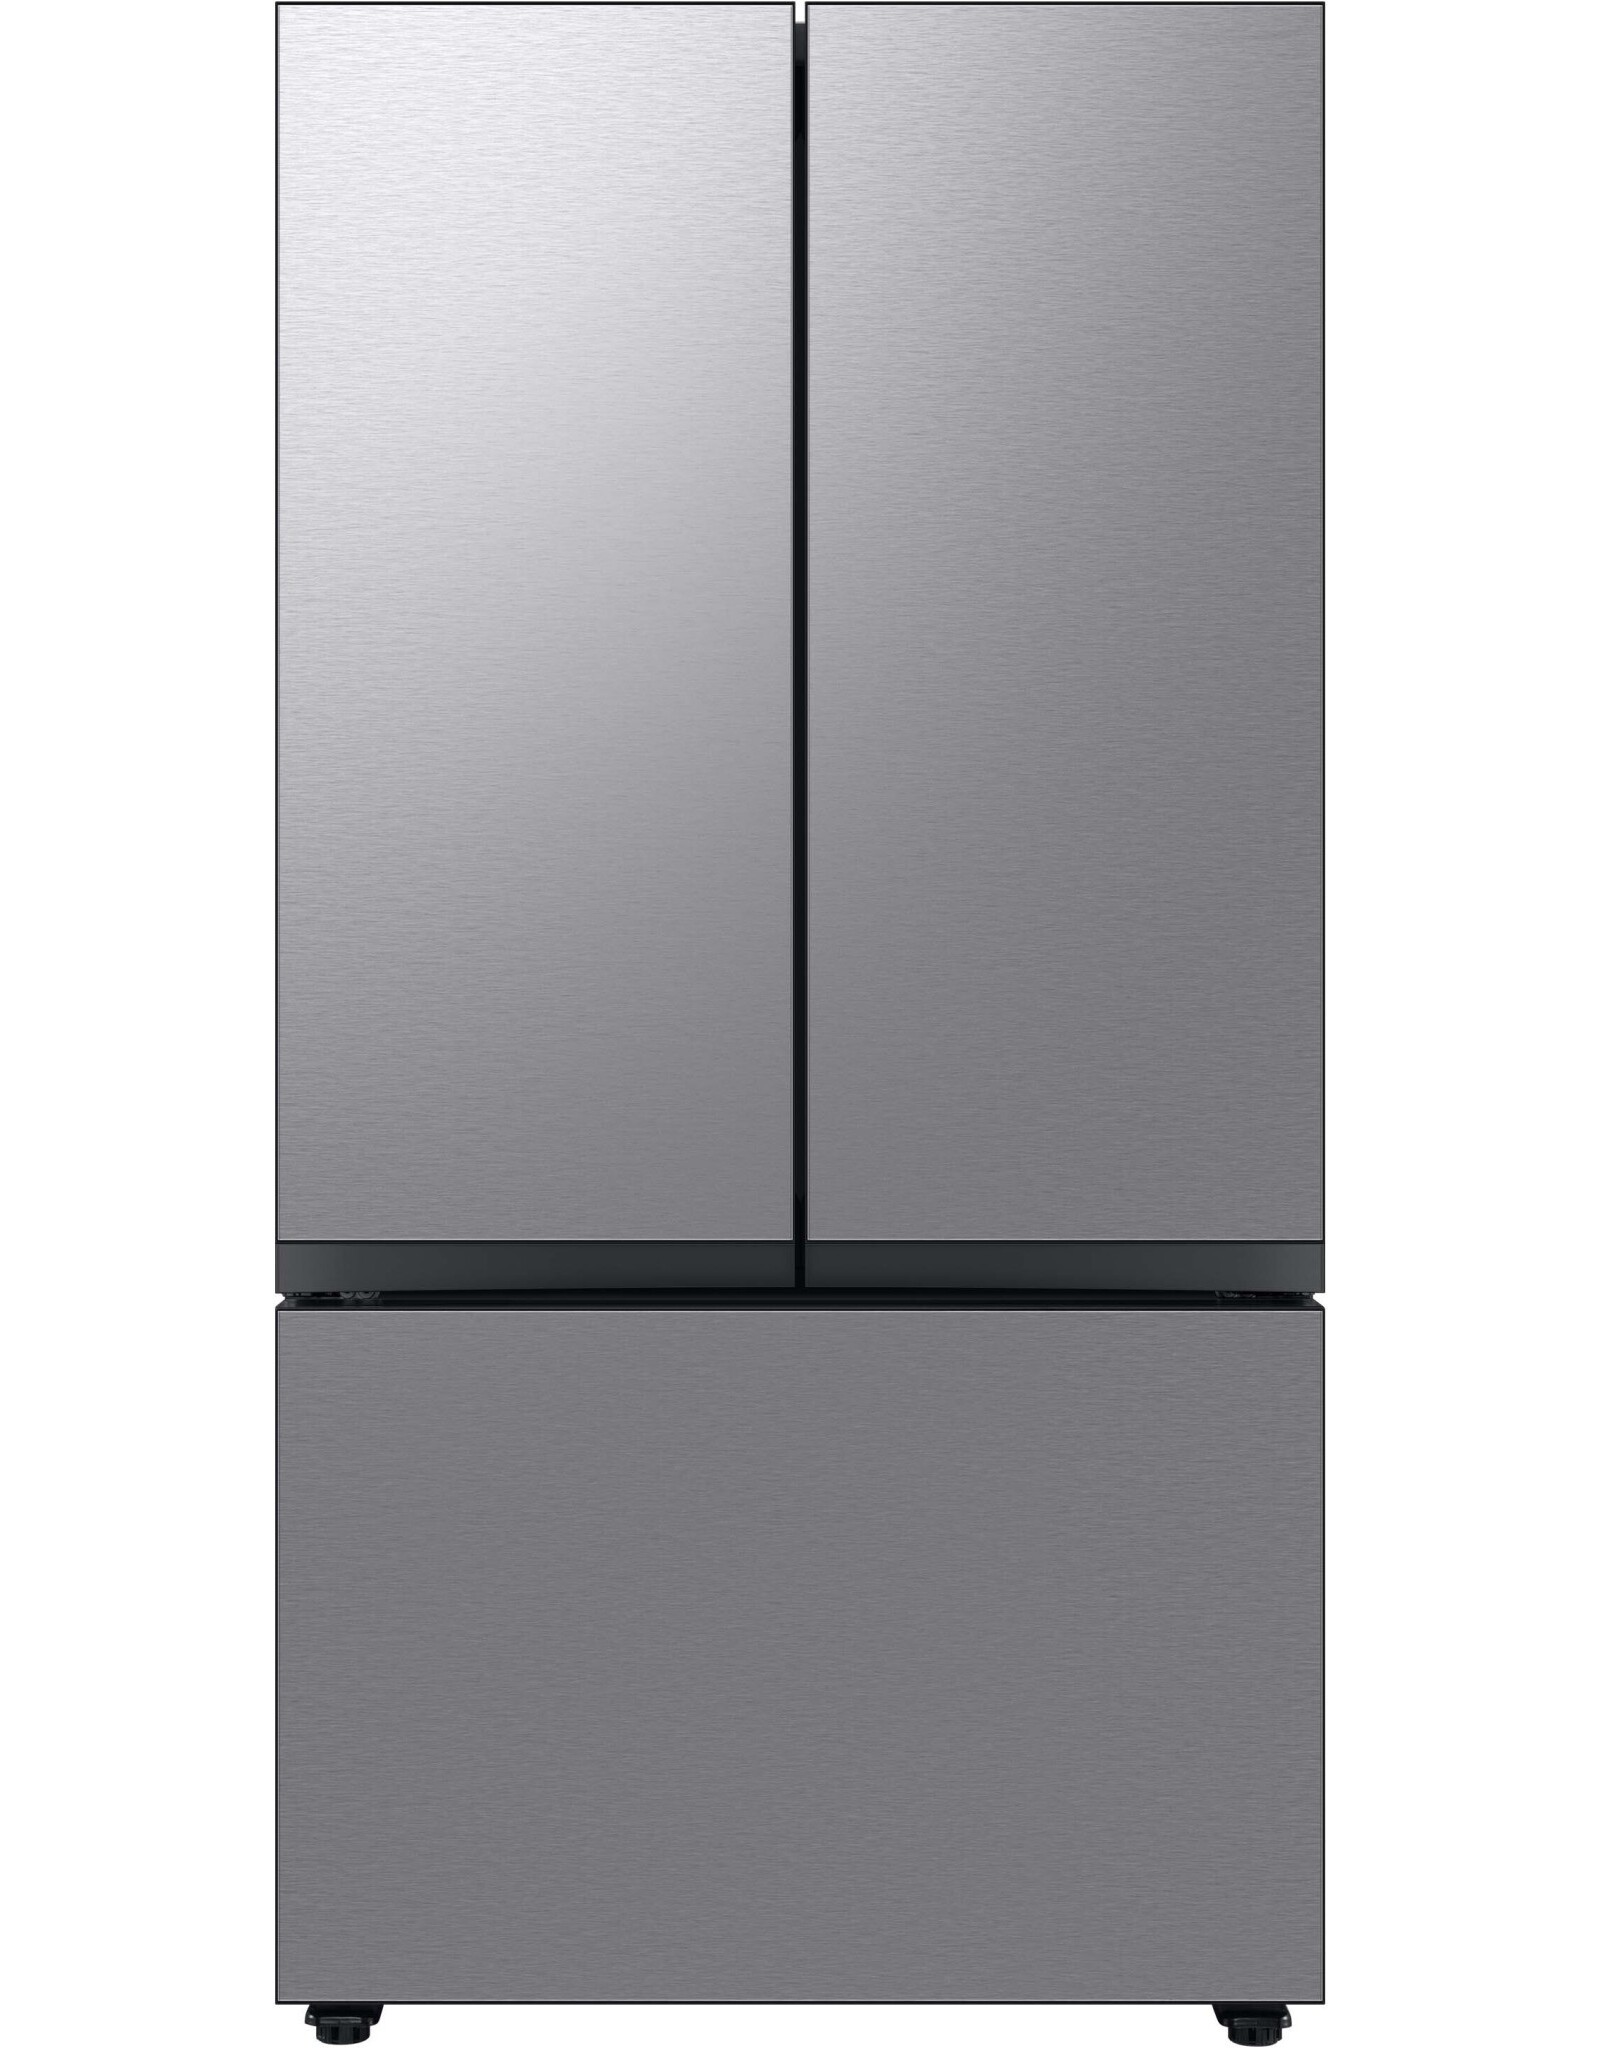 RF30BB6200QL  Bespoke 30 cu. ft. 3-Door French Door Smart Refrigerator with Autofill Water Pitcher in Stainless Steel, Standard Depth